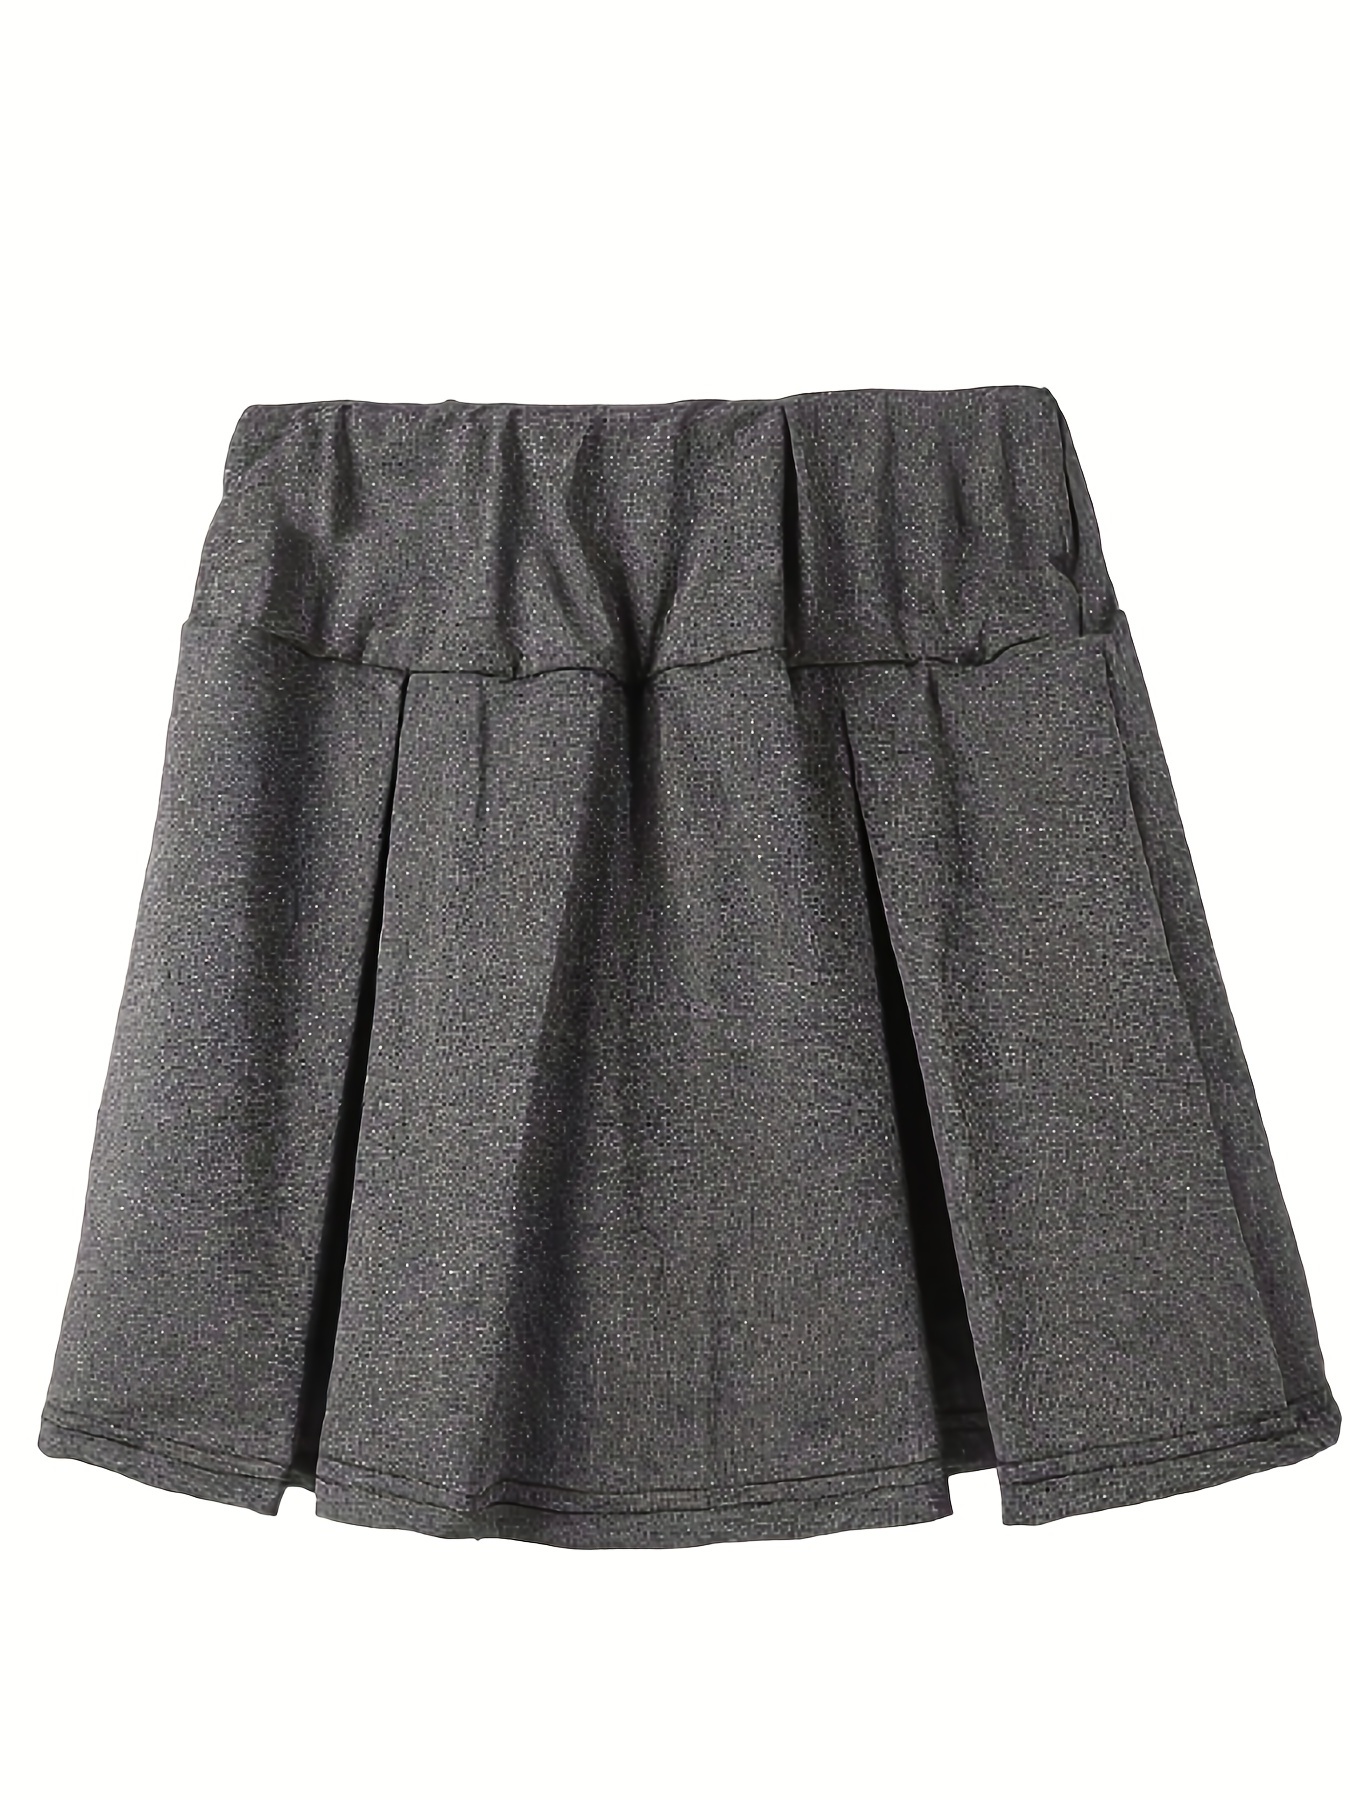 2pcs 2 in 1 sports short skirts for running golf tennis fashion elastic waist active skorts womens activewear details 13